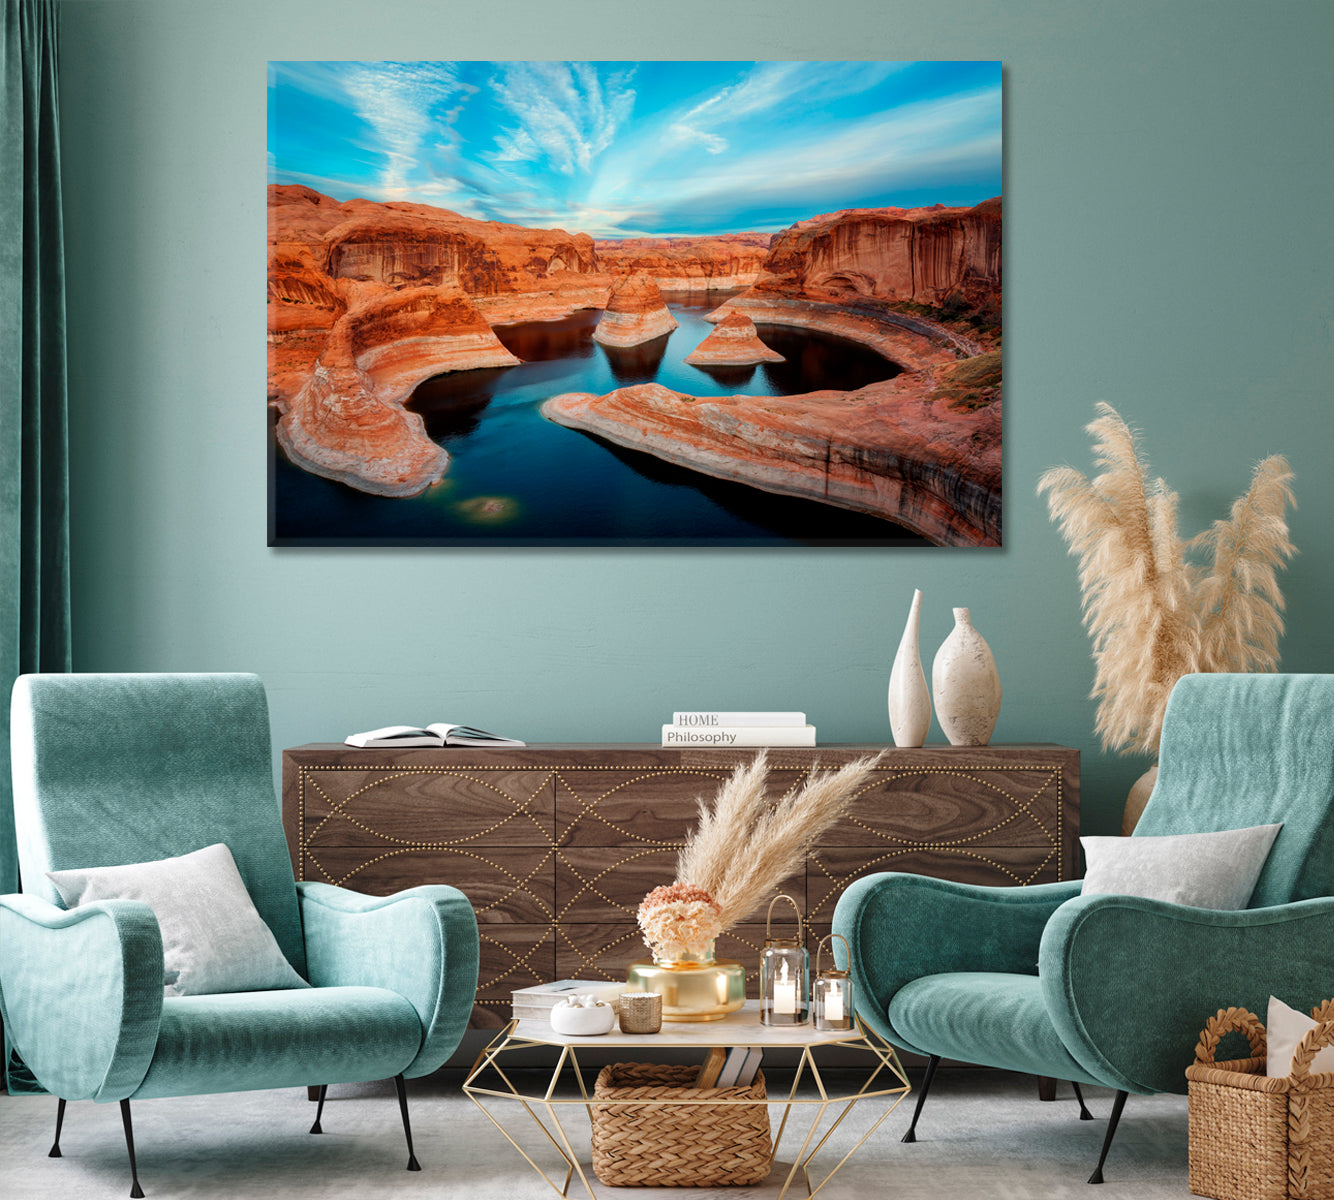 Utah Capitol Reef National Park Canvas Print-Canvas Print-CetArt-1 Panel-24x16 inches-CetArt